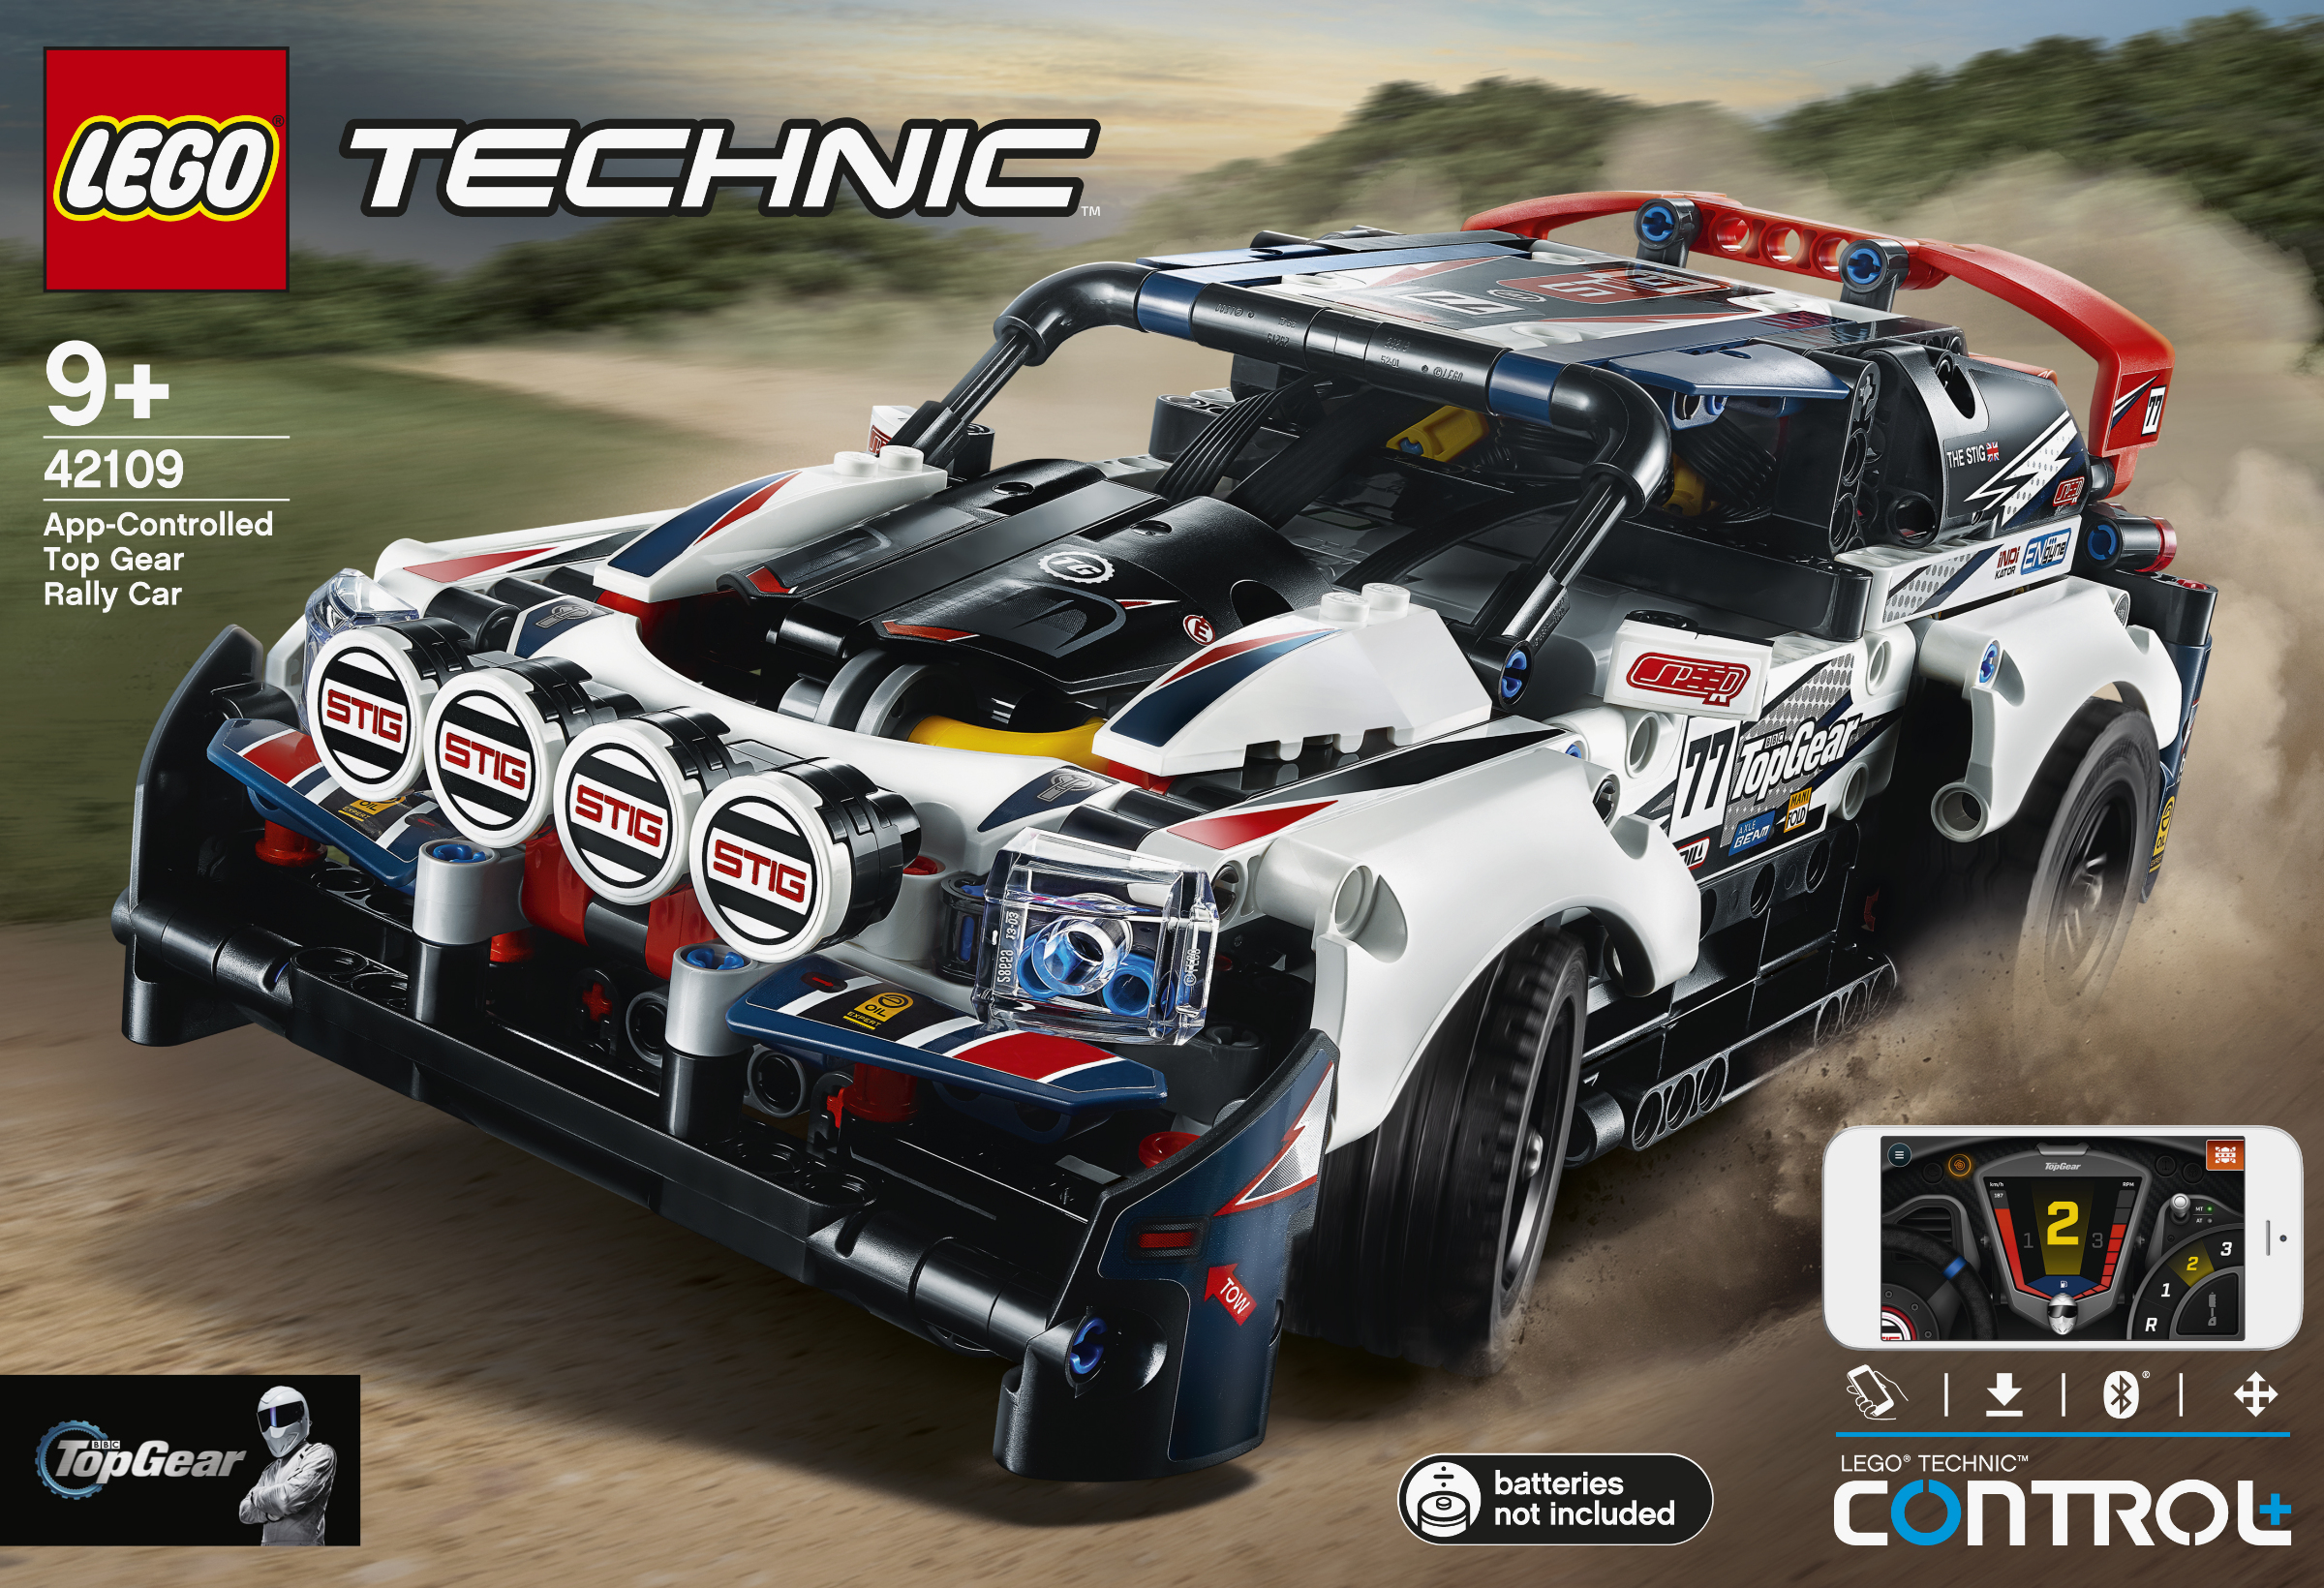 42109 Top Gear Rally Car revealed! | Brickset